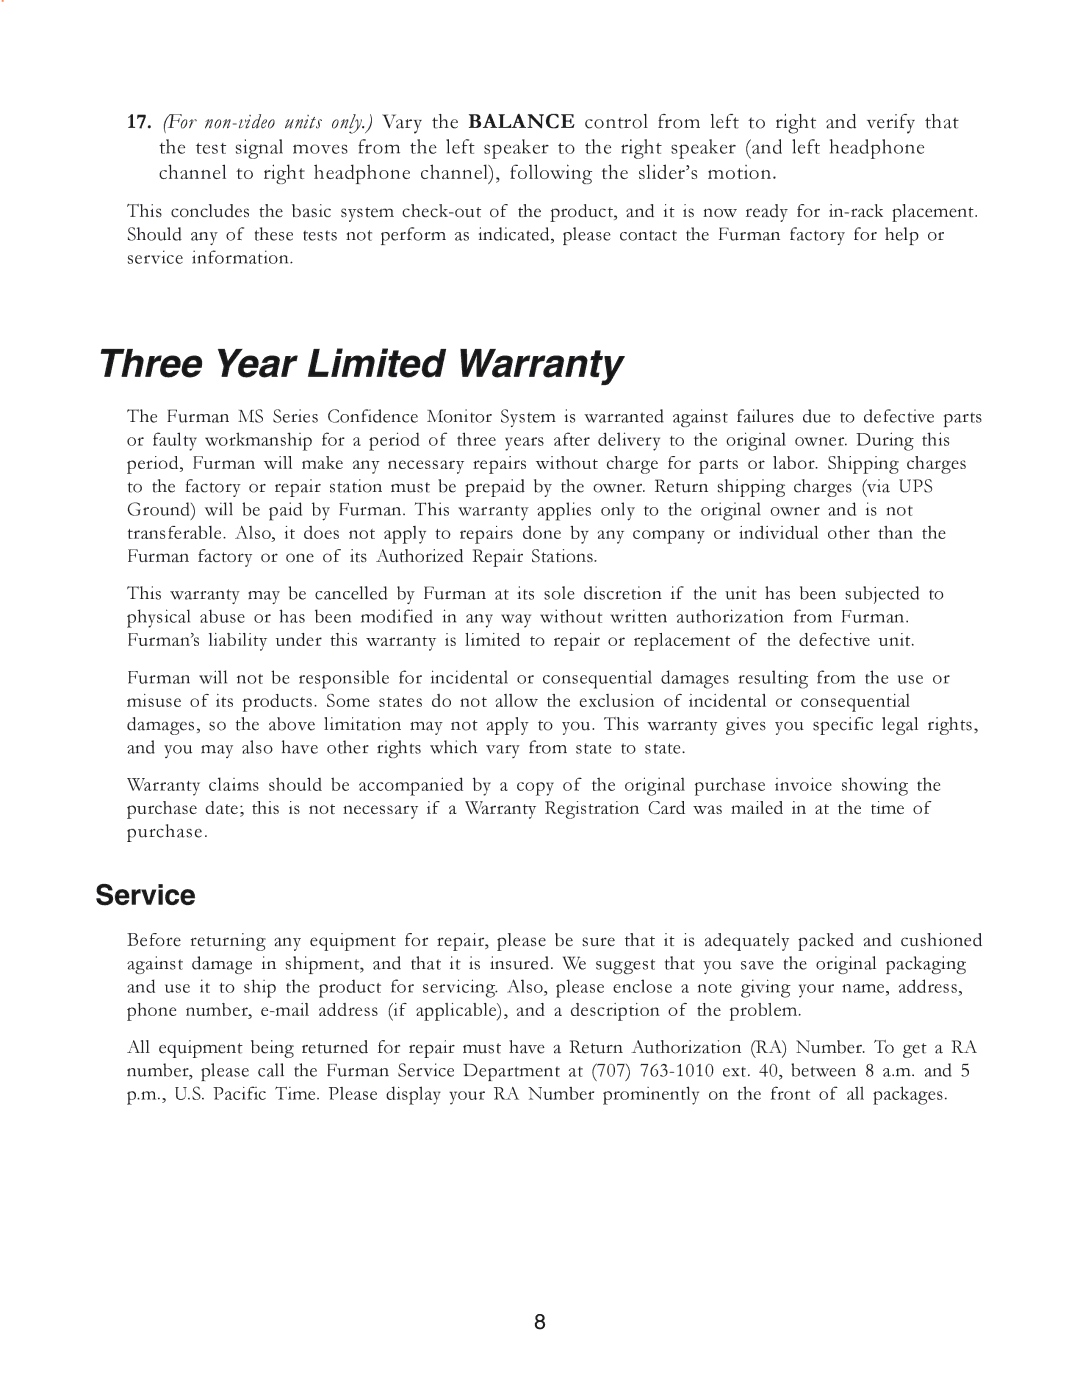 Furman Sound MS2A-1 owner manual Three Year Limited Warranty, Service 